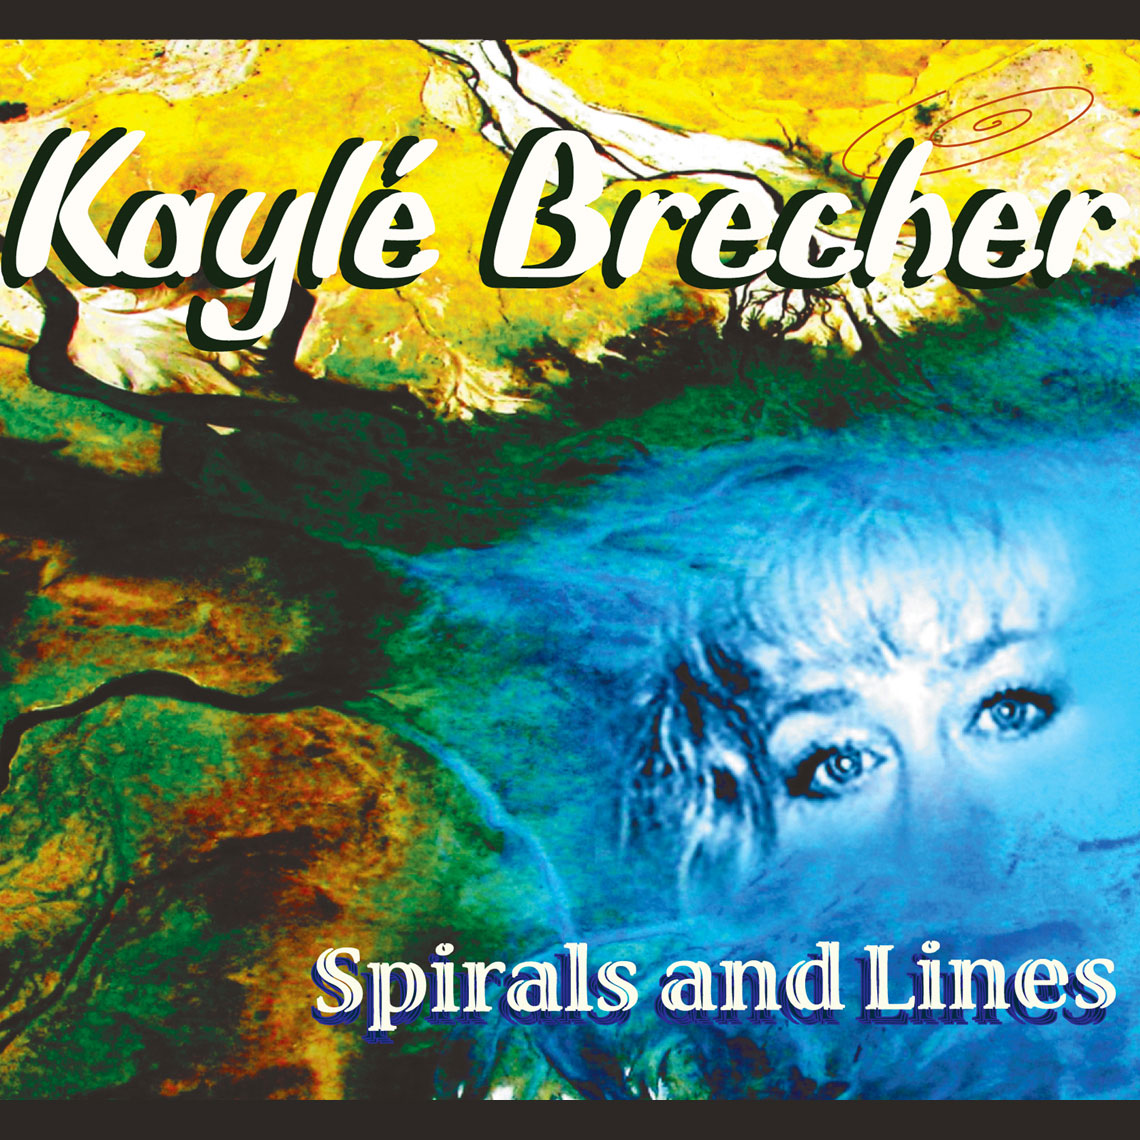 SPIRALS and LINES by Kaylé Brecher